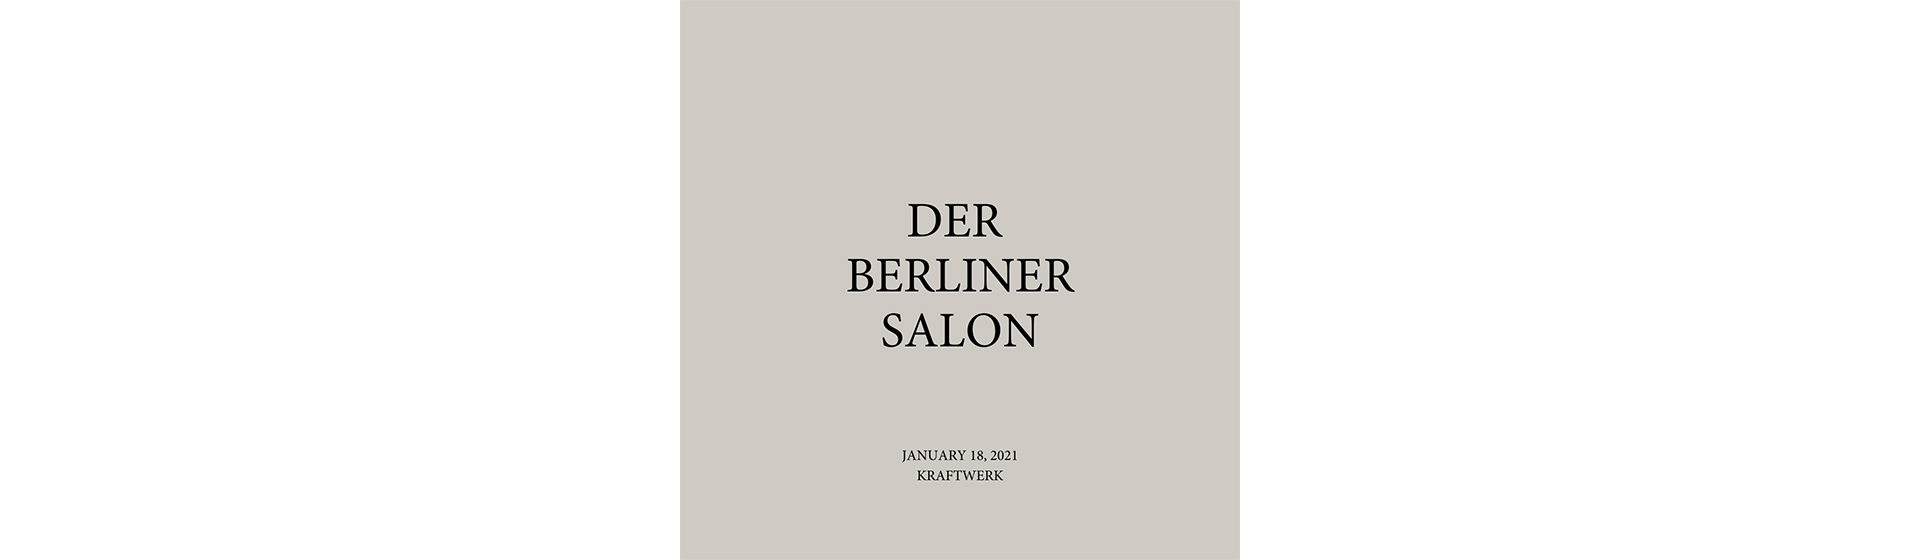 @ DER BERLINER SALON